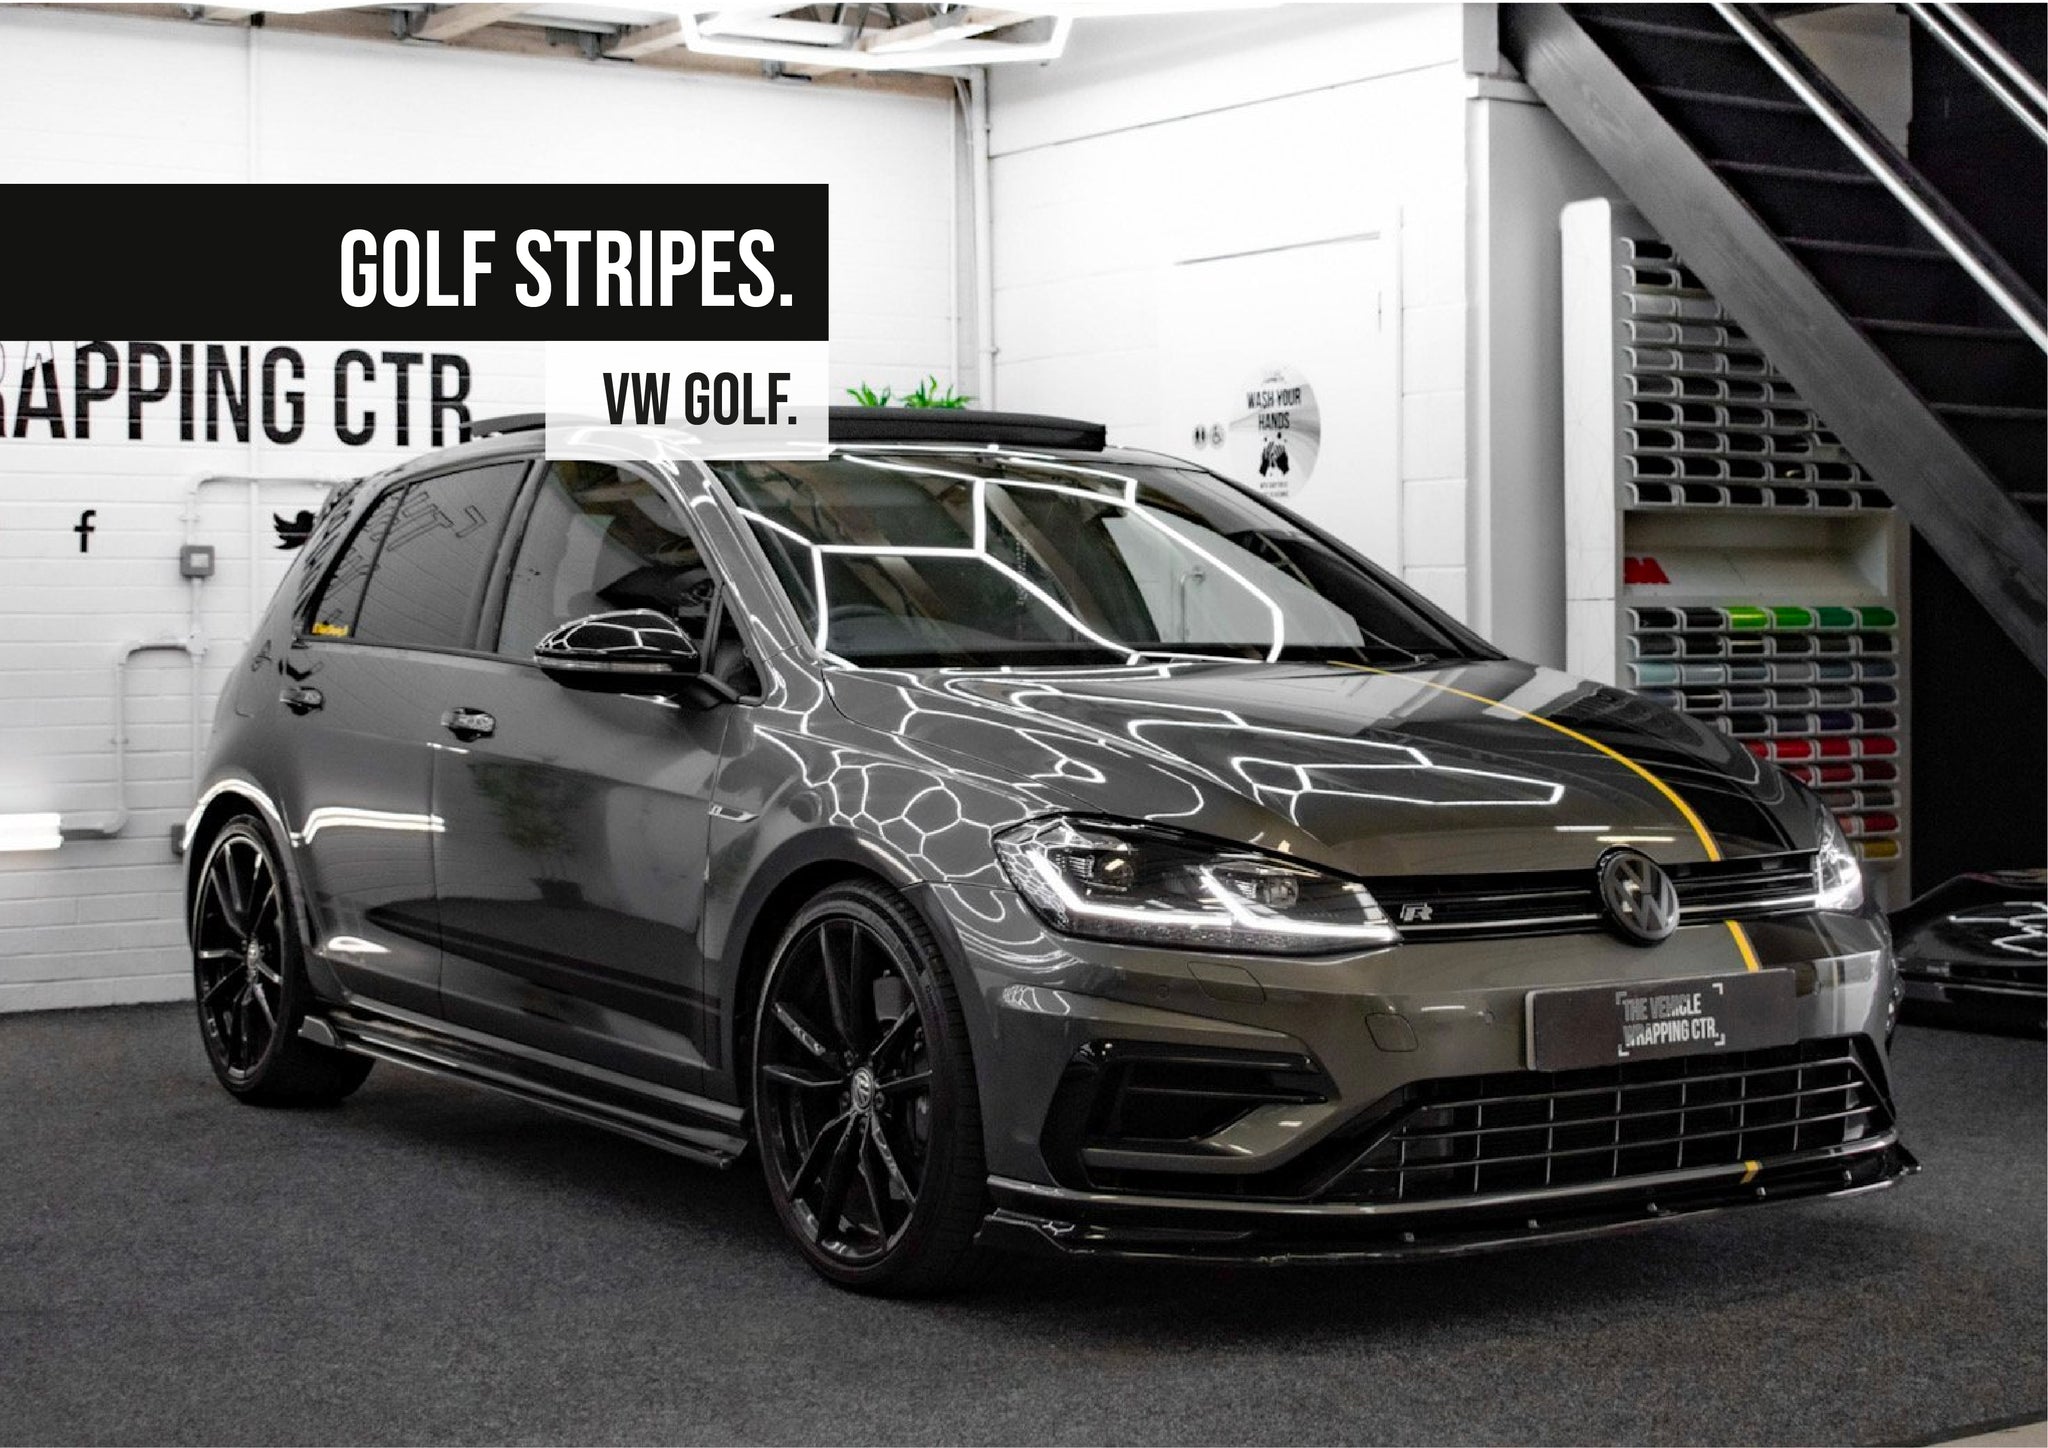 VW Golf R Matte Black Vinyl Wrap  Vw golf, Volkswagen, Volkswagen golf